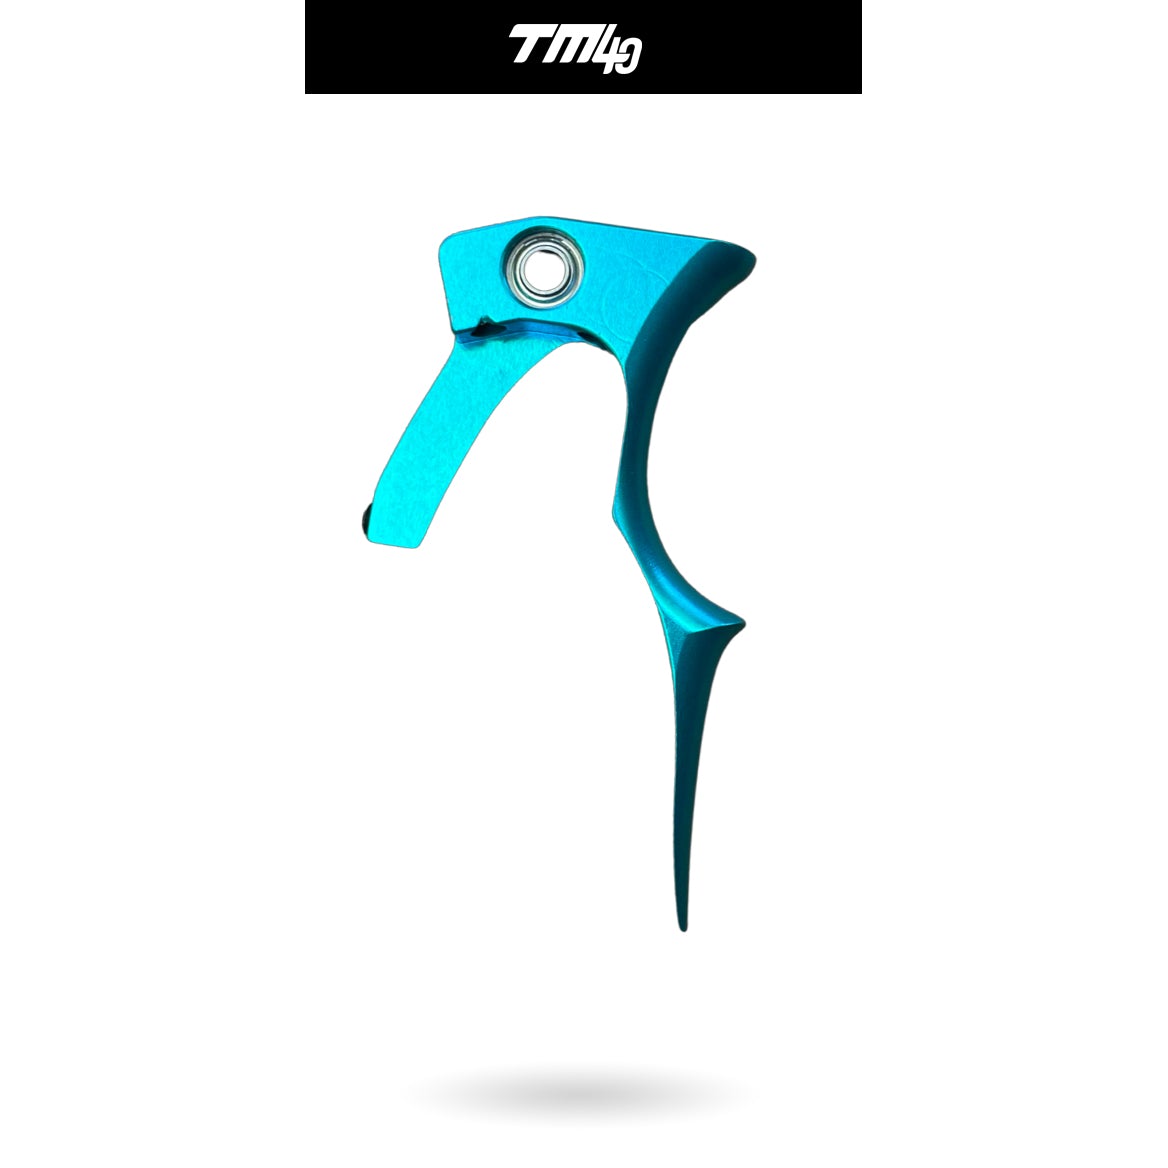 Infamous Luxe Deuce Trigger - TM40 - Teal Blue